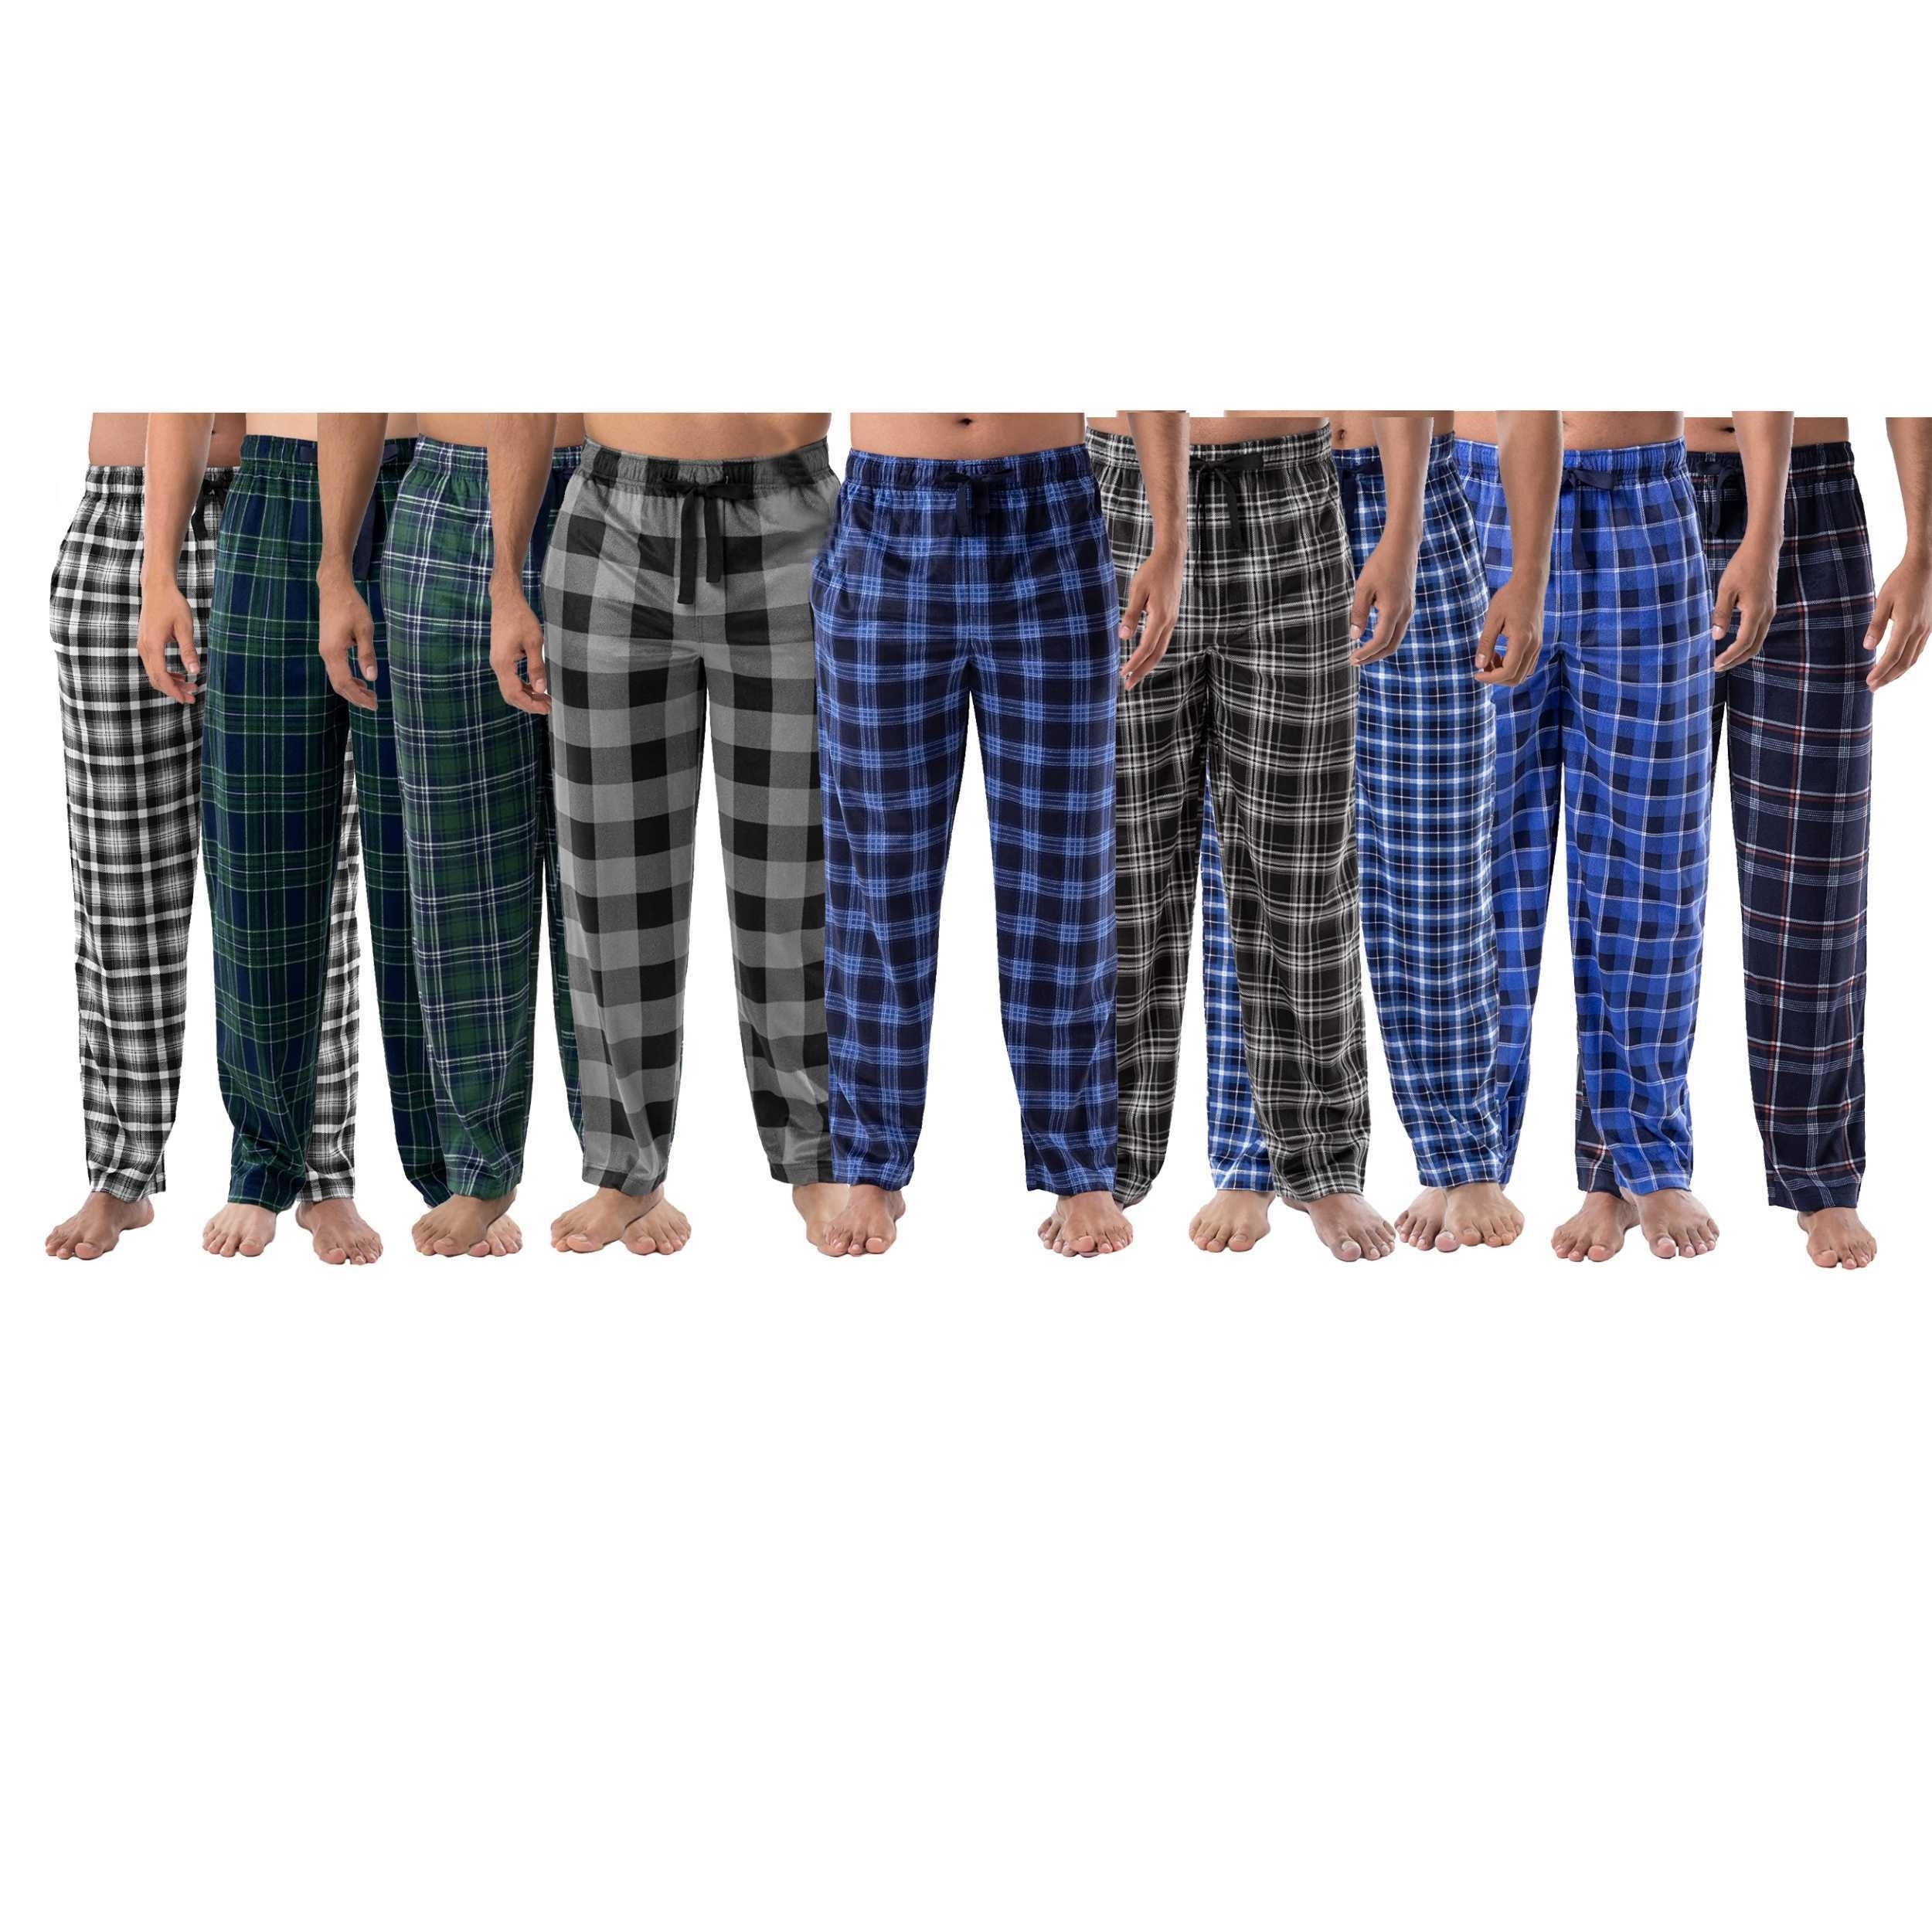 3 Pack: Men's Soft Micro Fleece Plaid Print Pajama Lounge Pants - 2X-Large